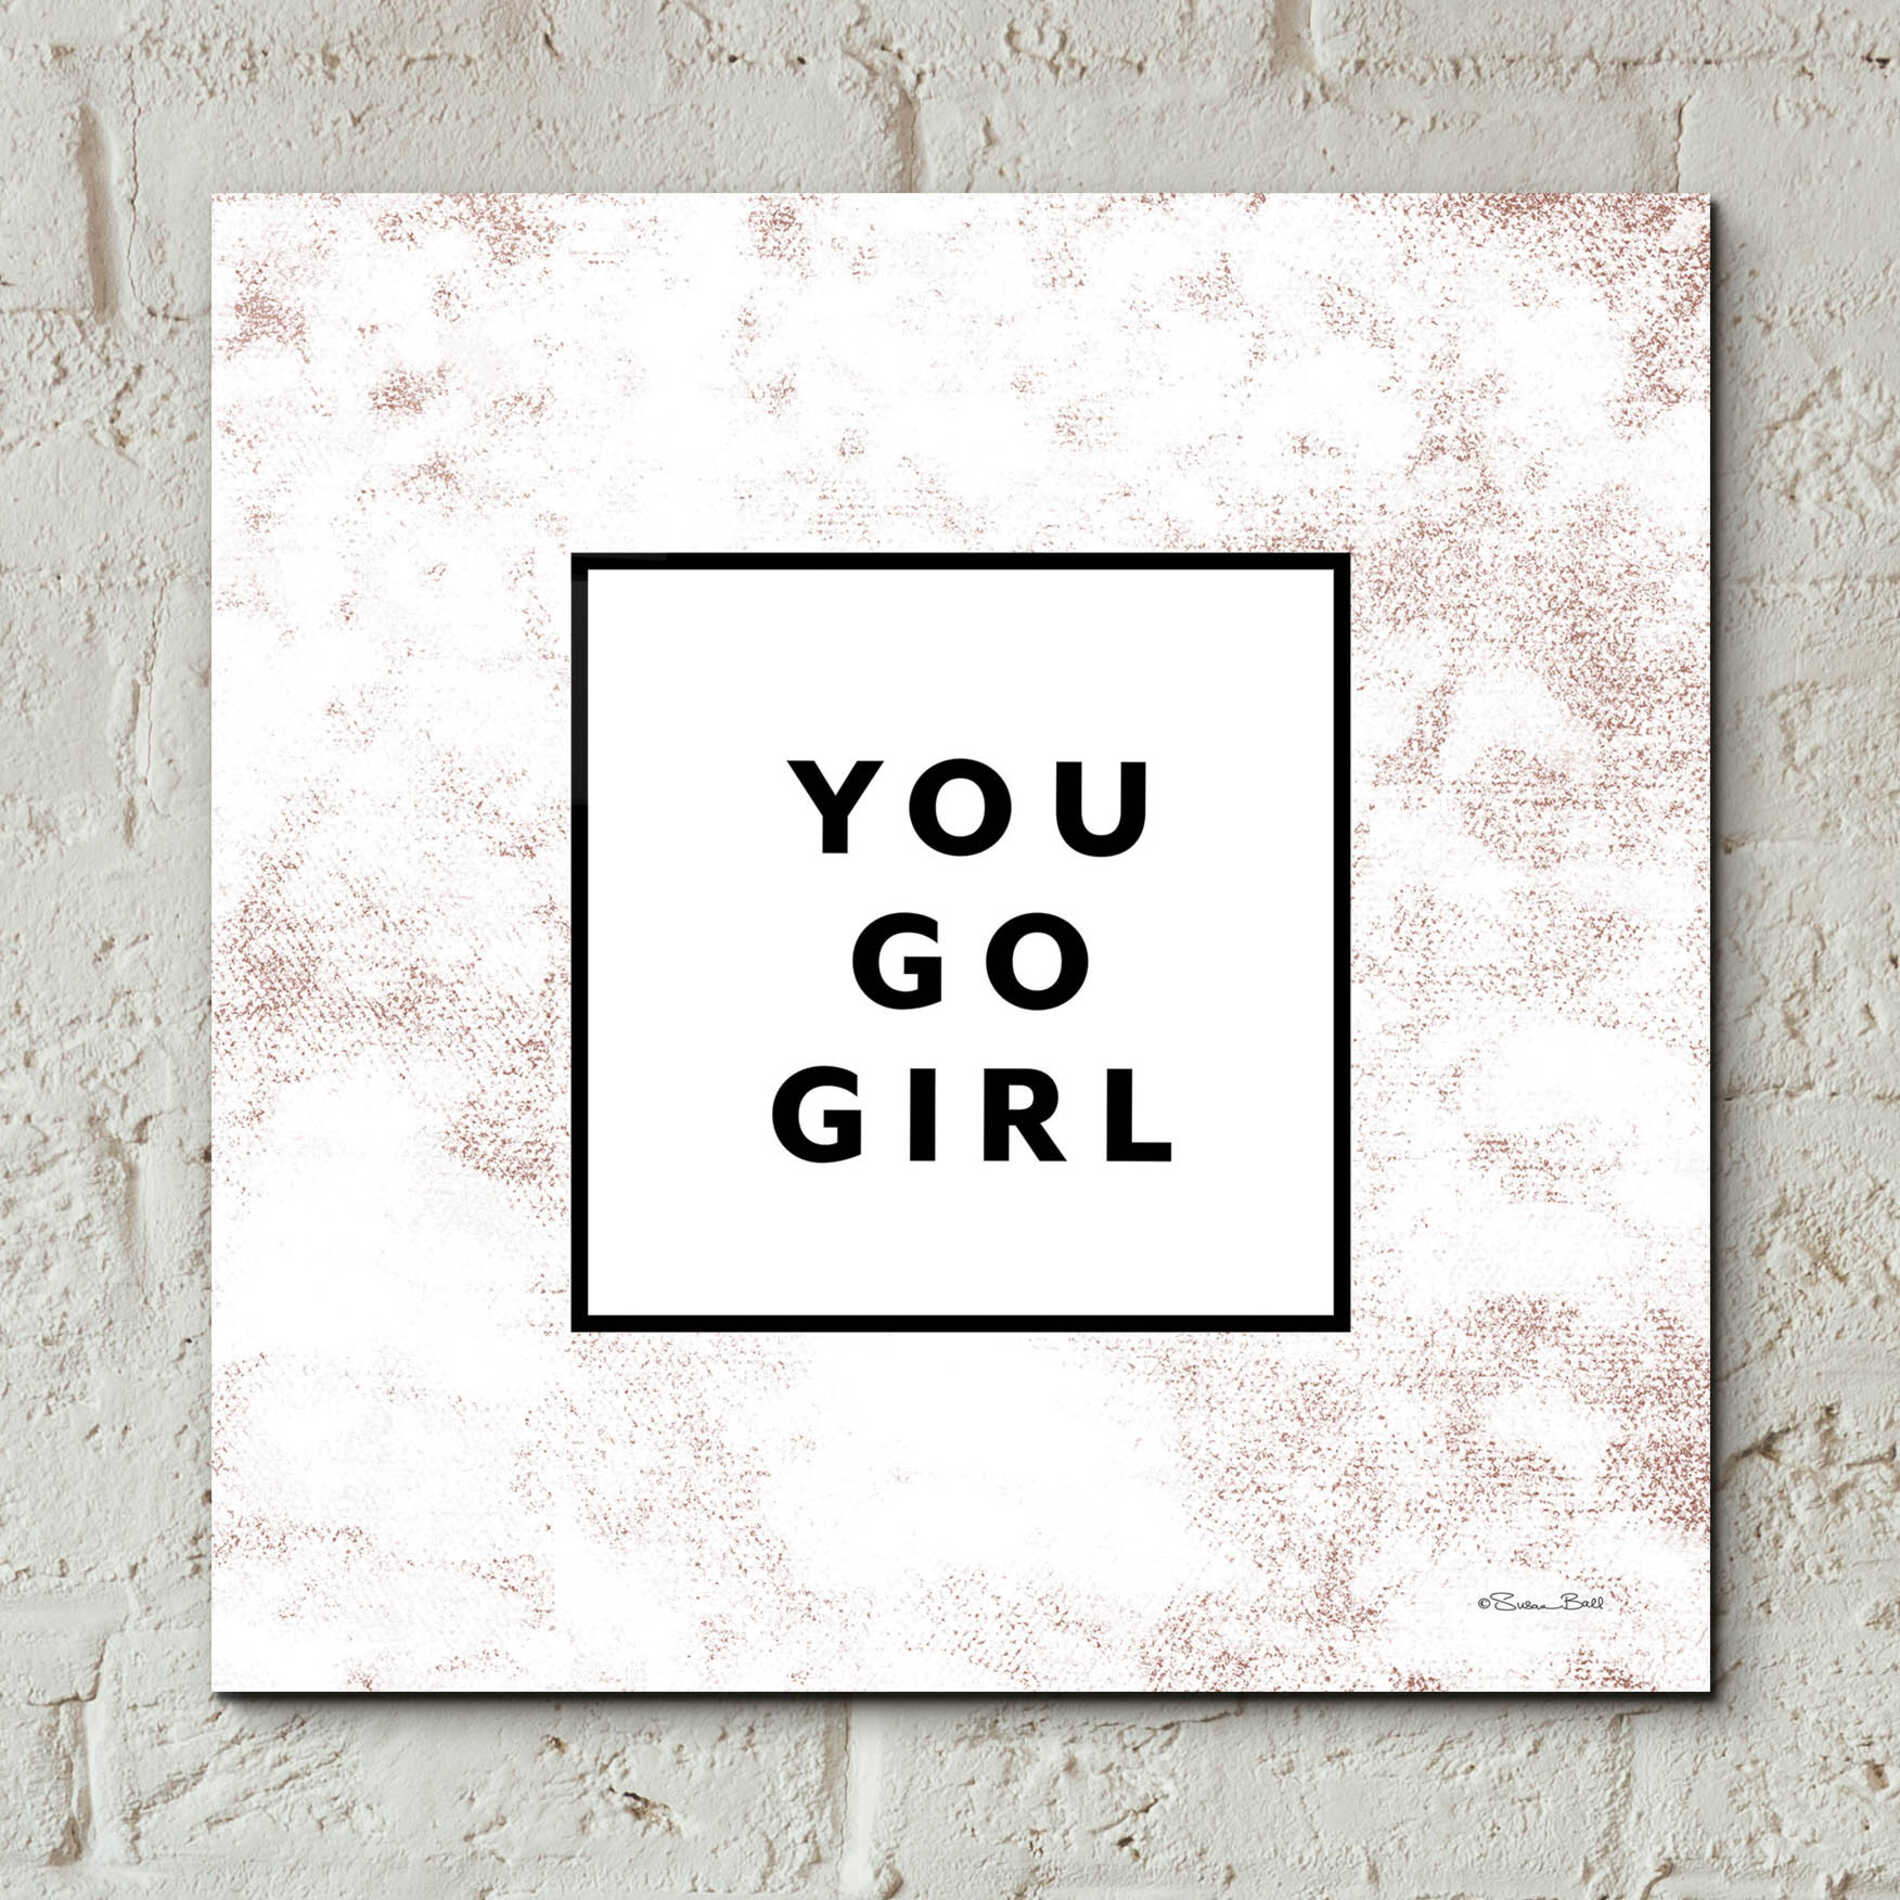 Epic Art 'You Go Girl Bold' by Susan Ball, Acrylic Glass Wall Art,12x12